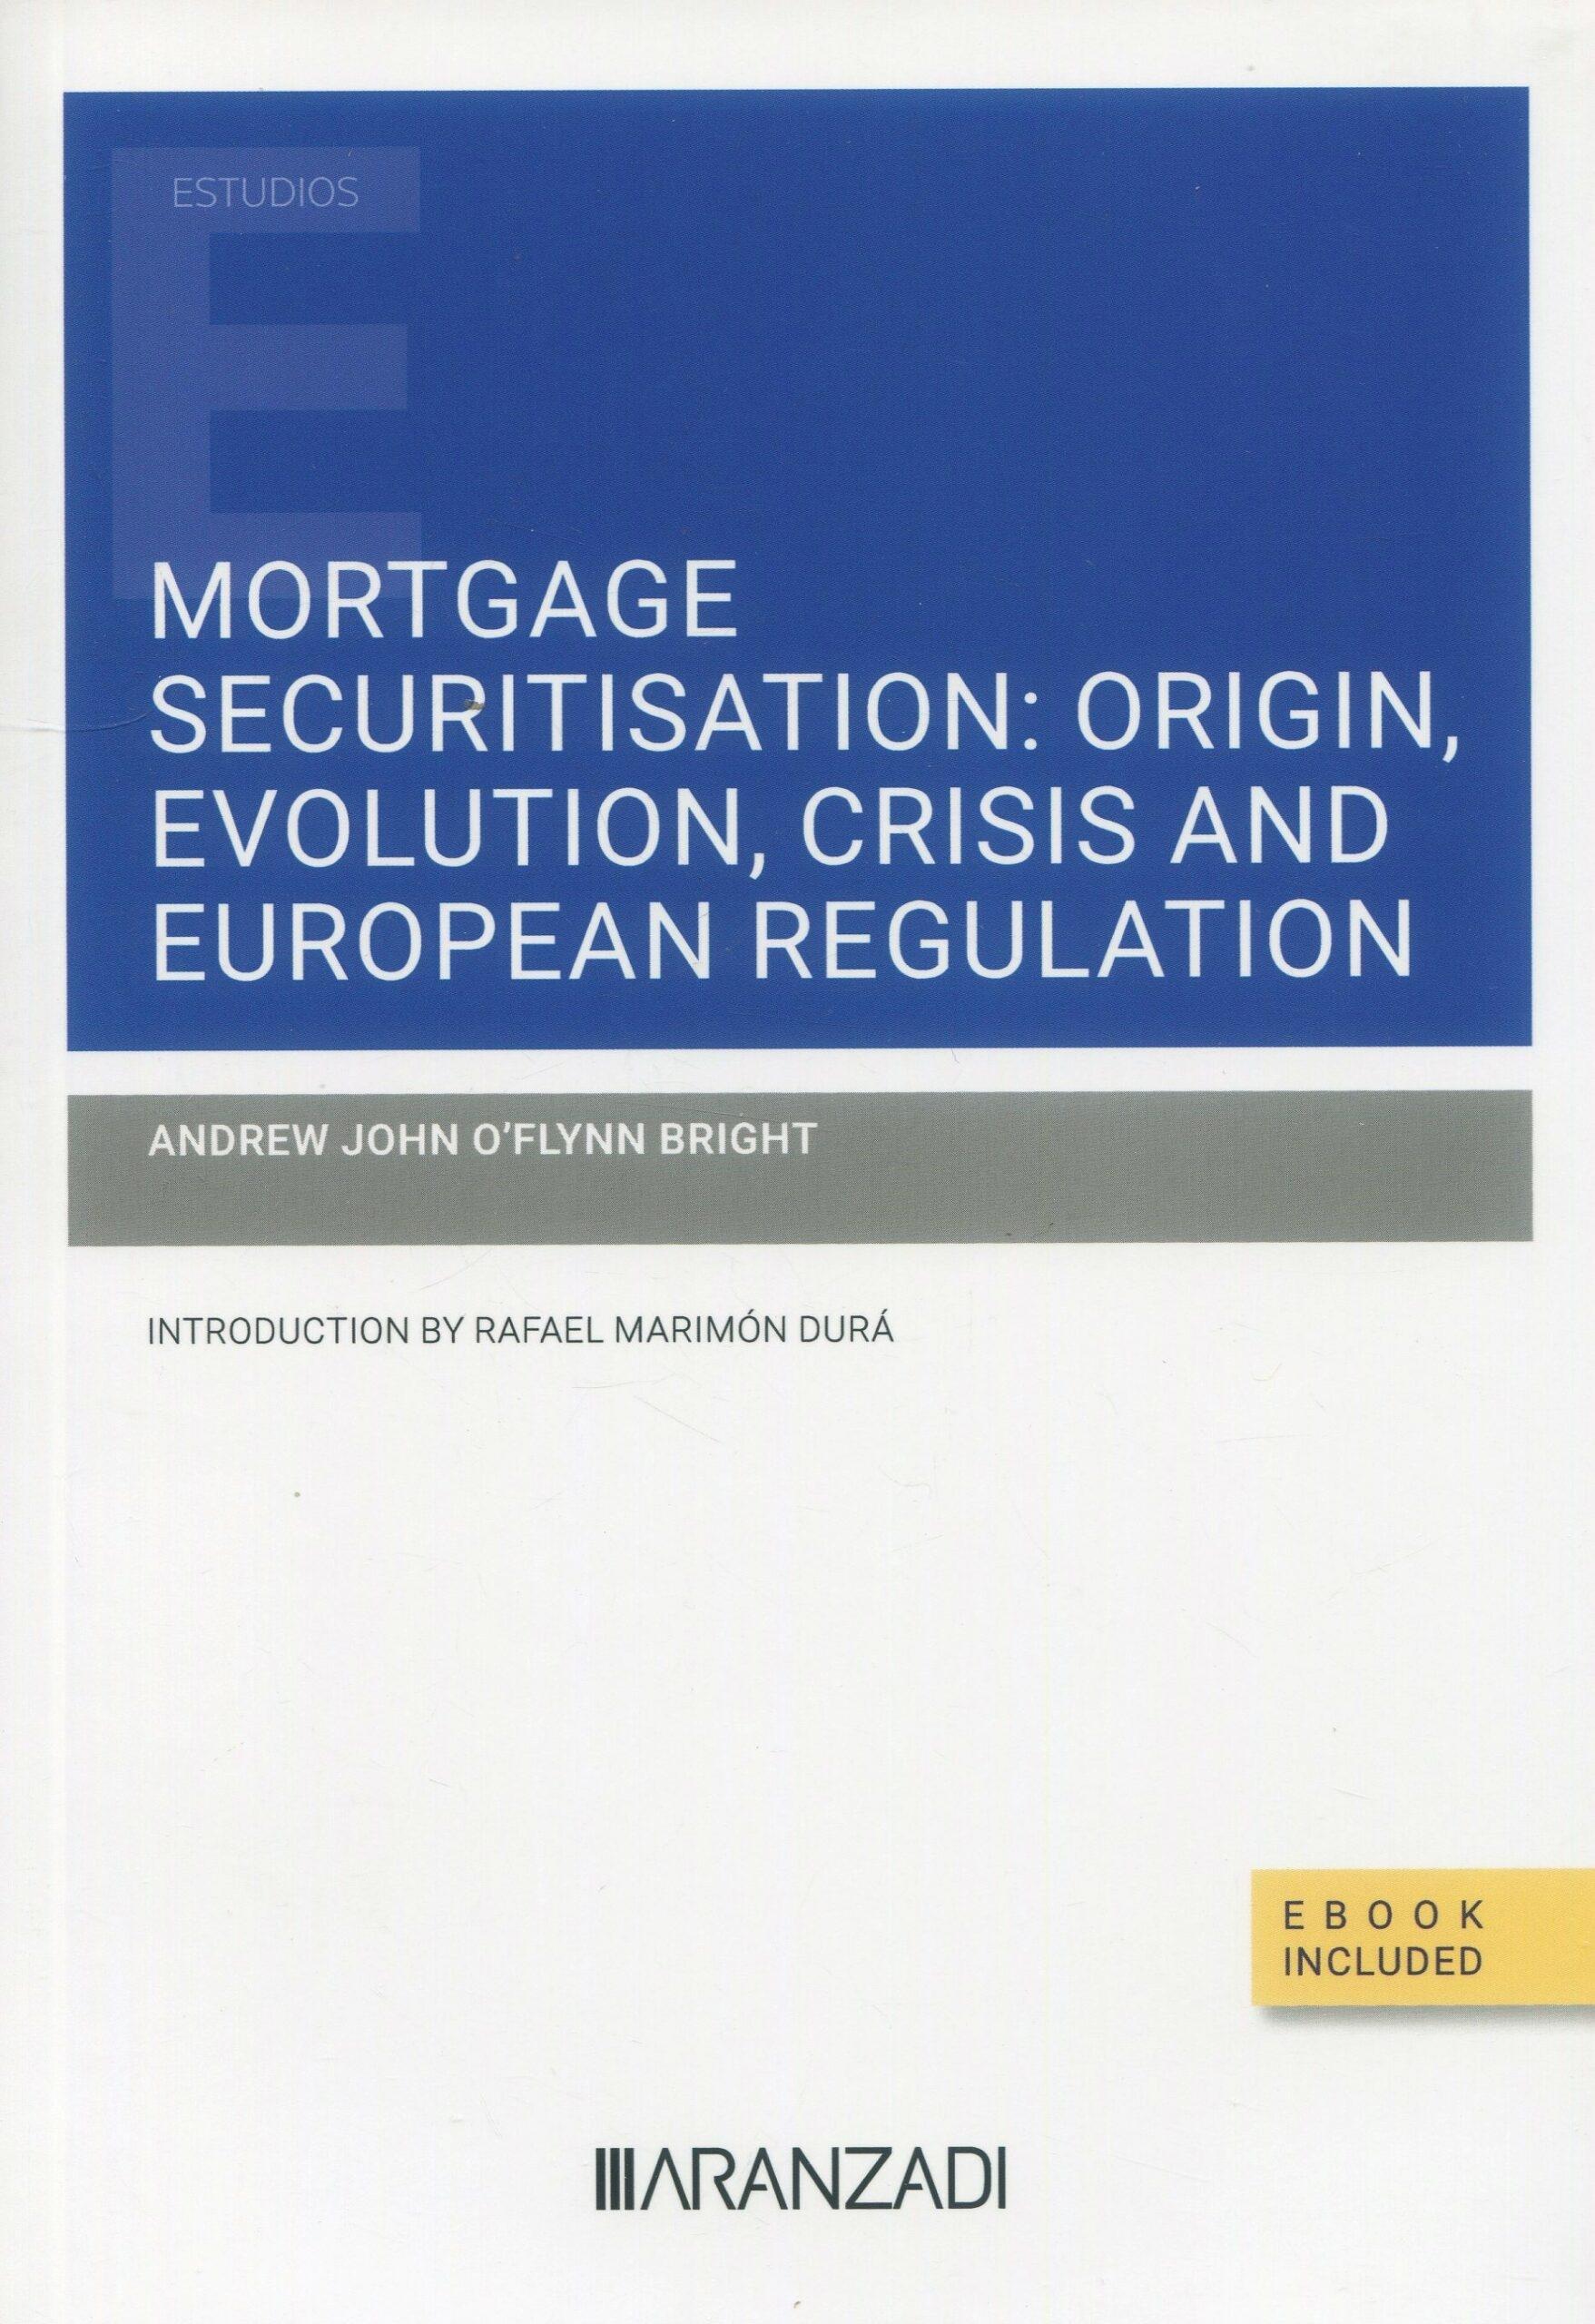 Mortgage securitisation "Origin, evolution, crisis and European regulation"